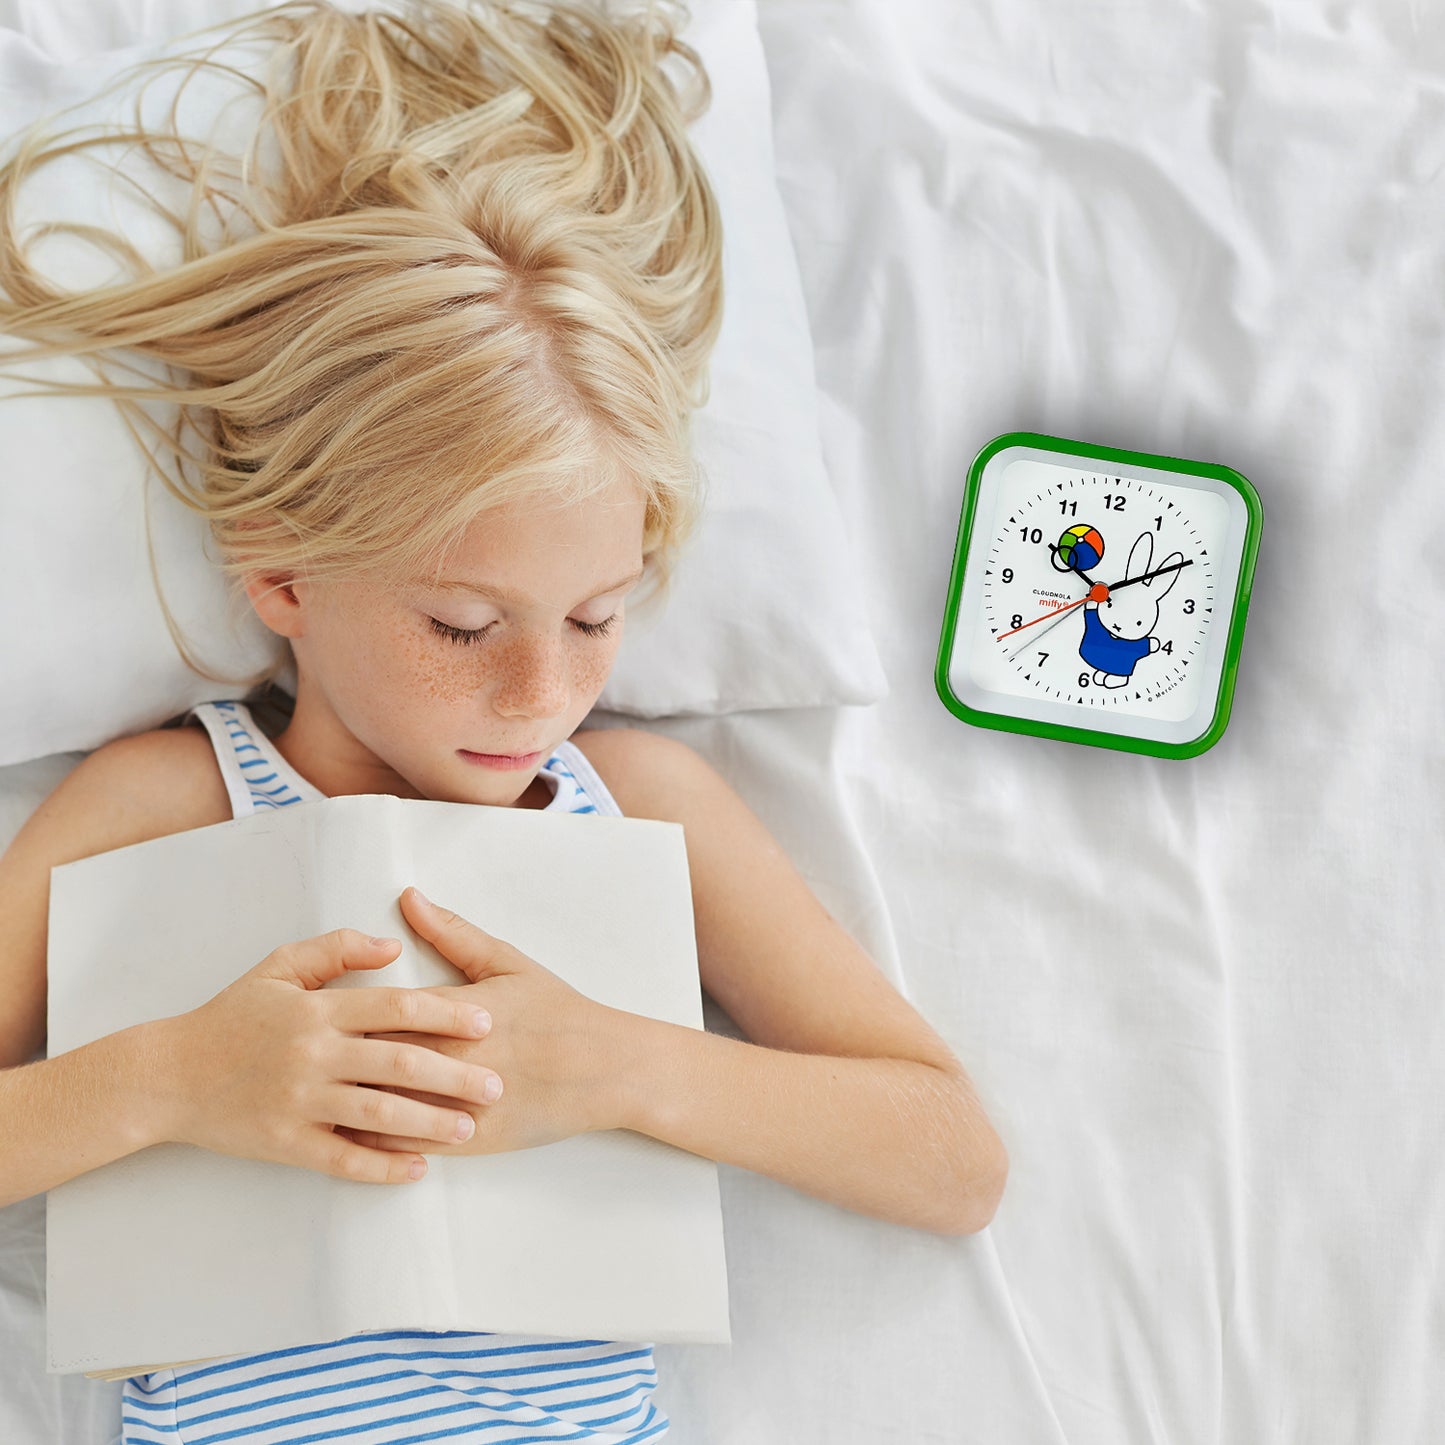 Miffy Green Alarm Clock - Nijntje Analog Timepiece - LED Light - Snooze Function - Dutch Design